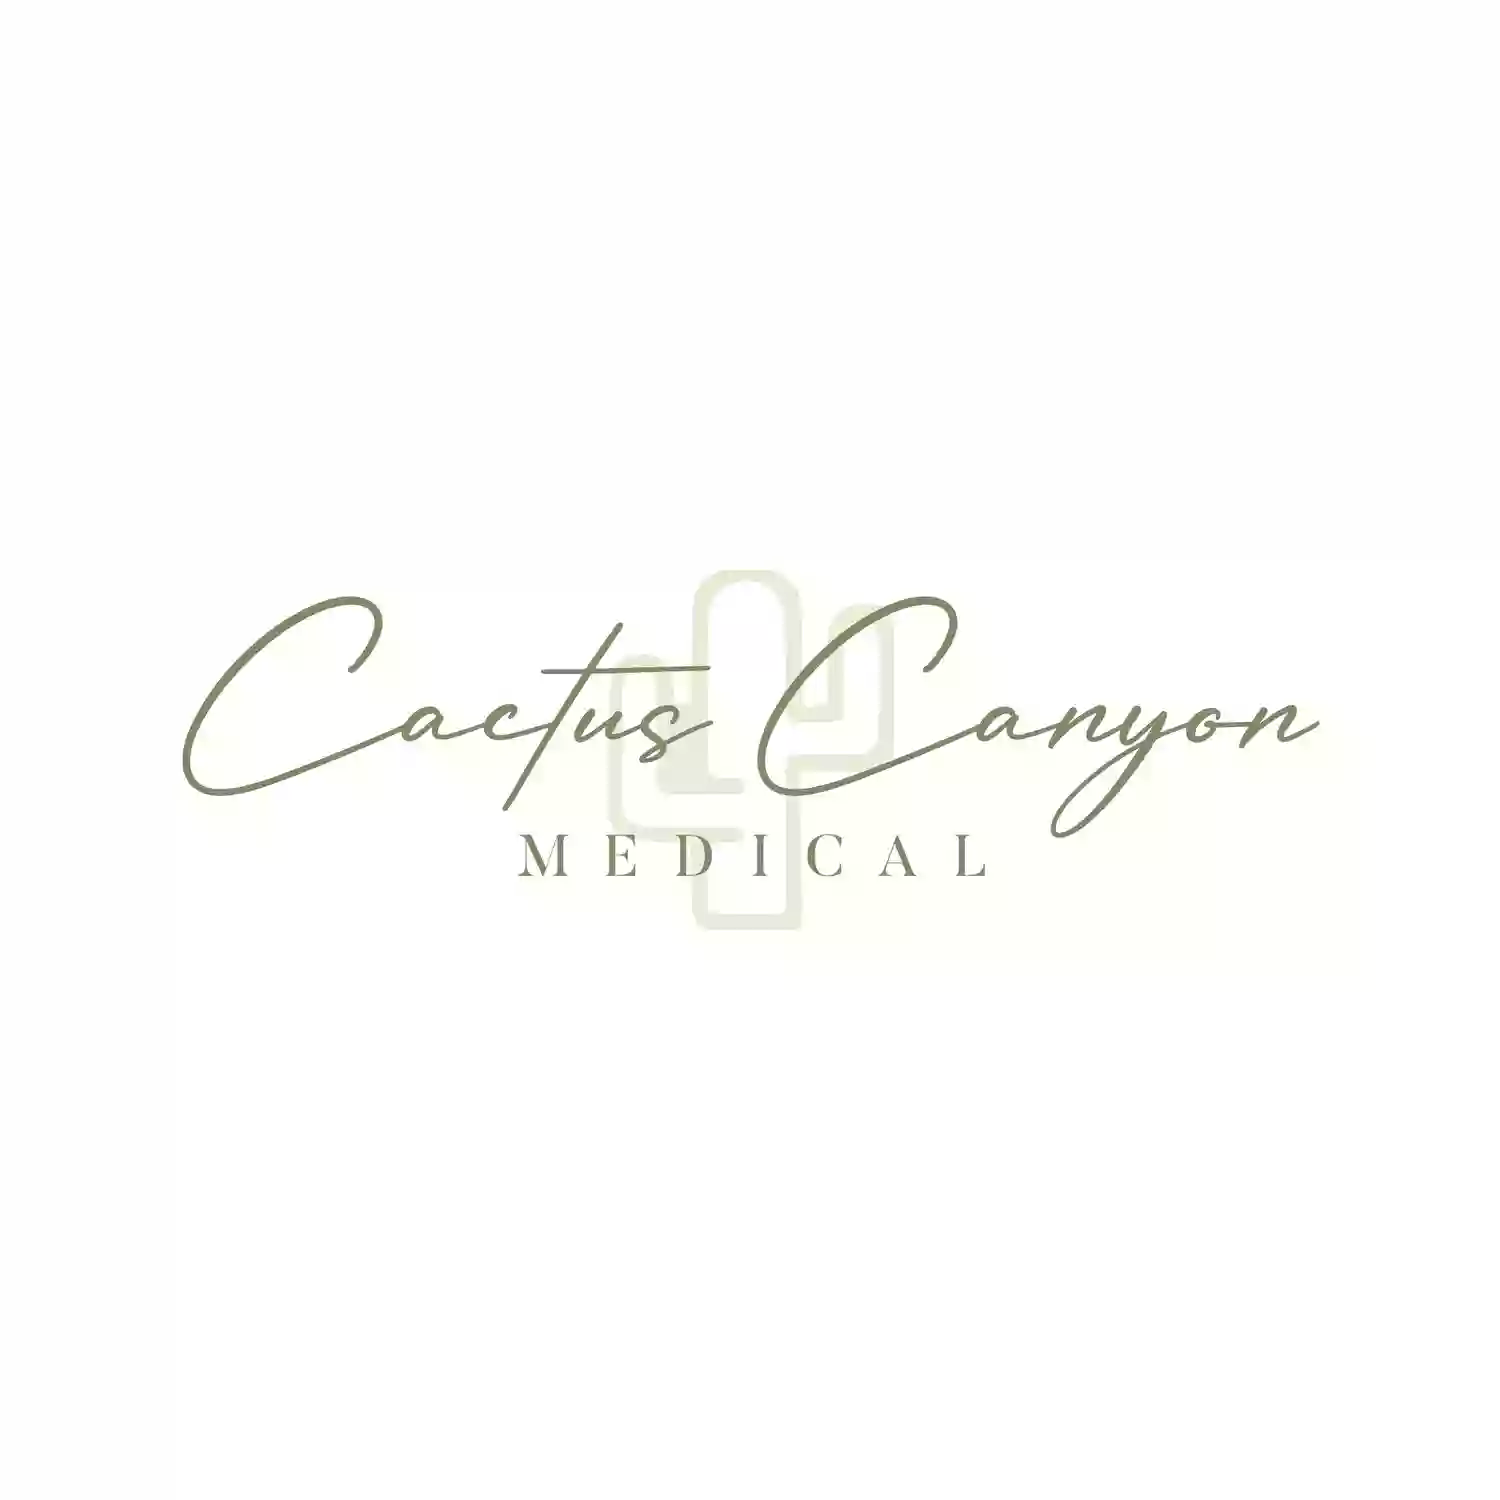 Cactus Canyon Medical